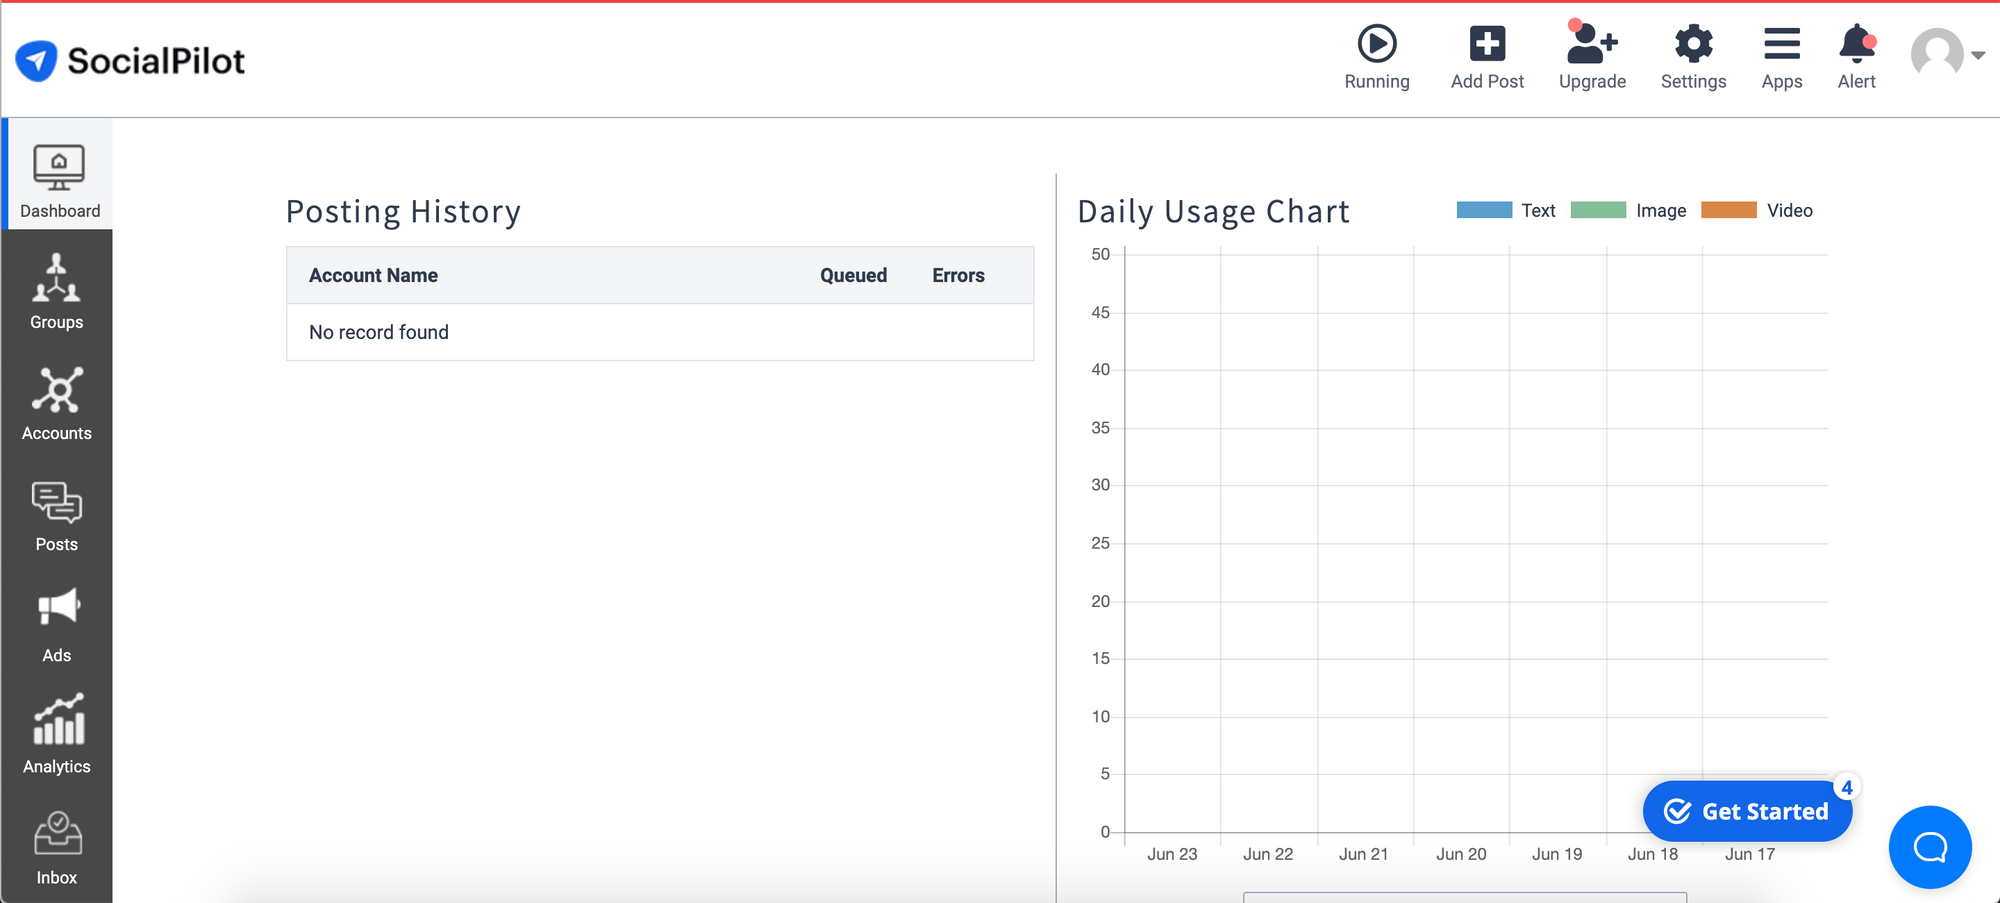 This is SocialPilot’s content scheduler and calendar.